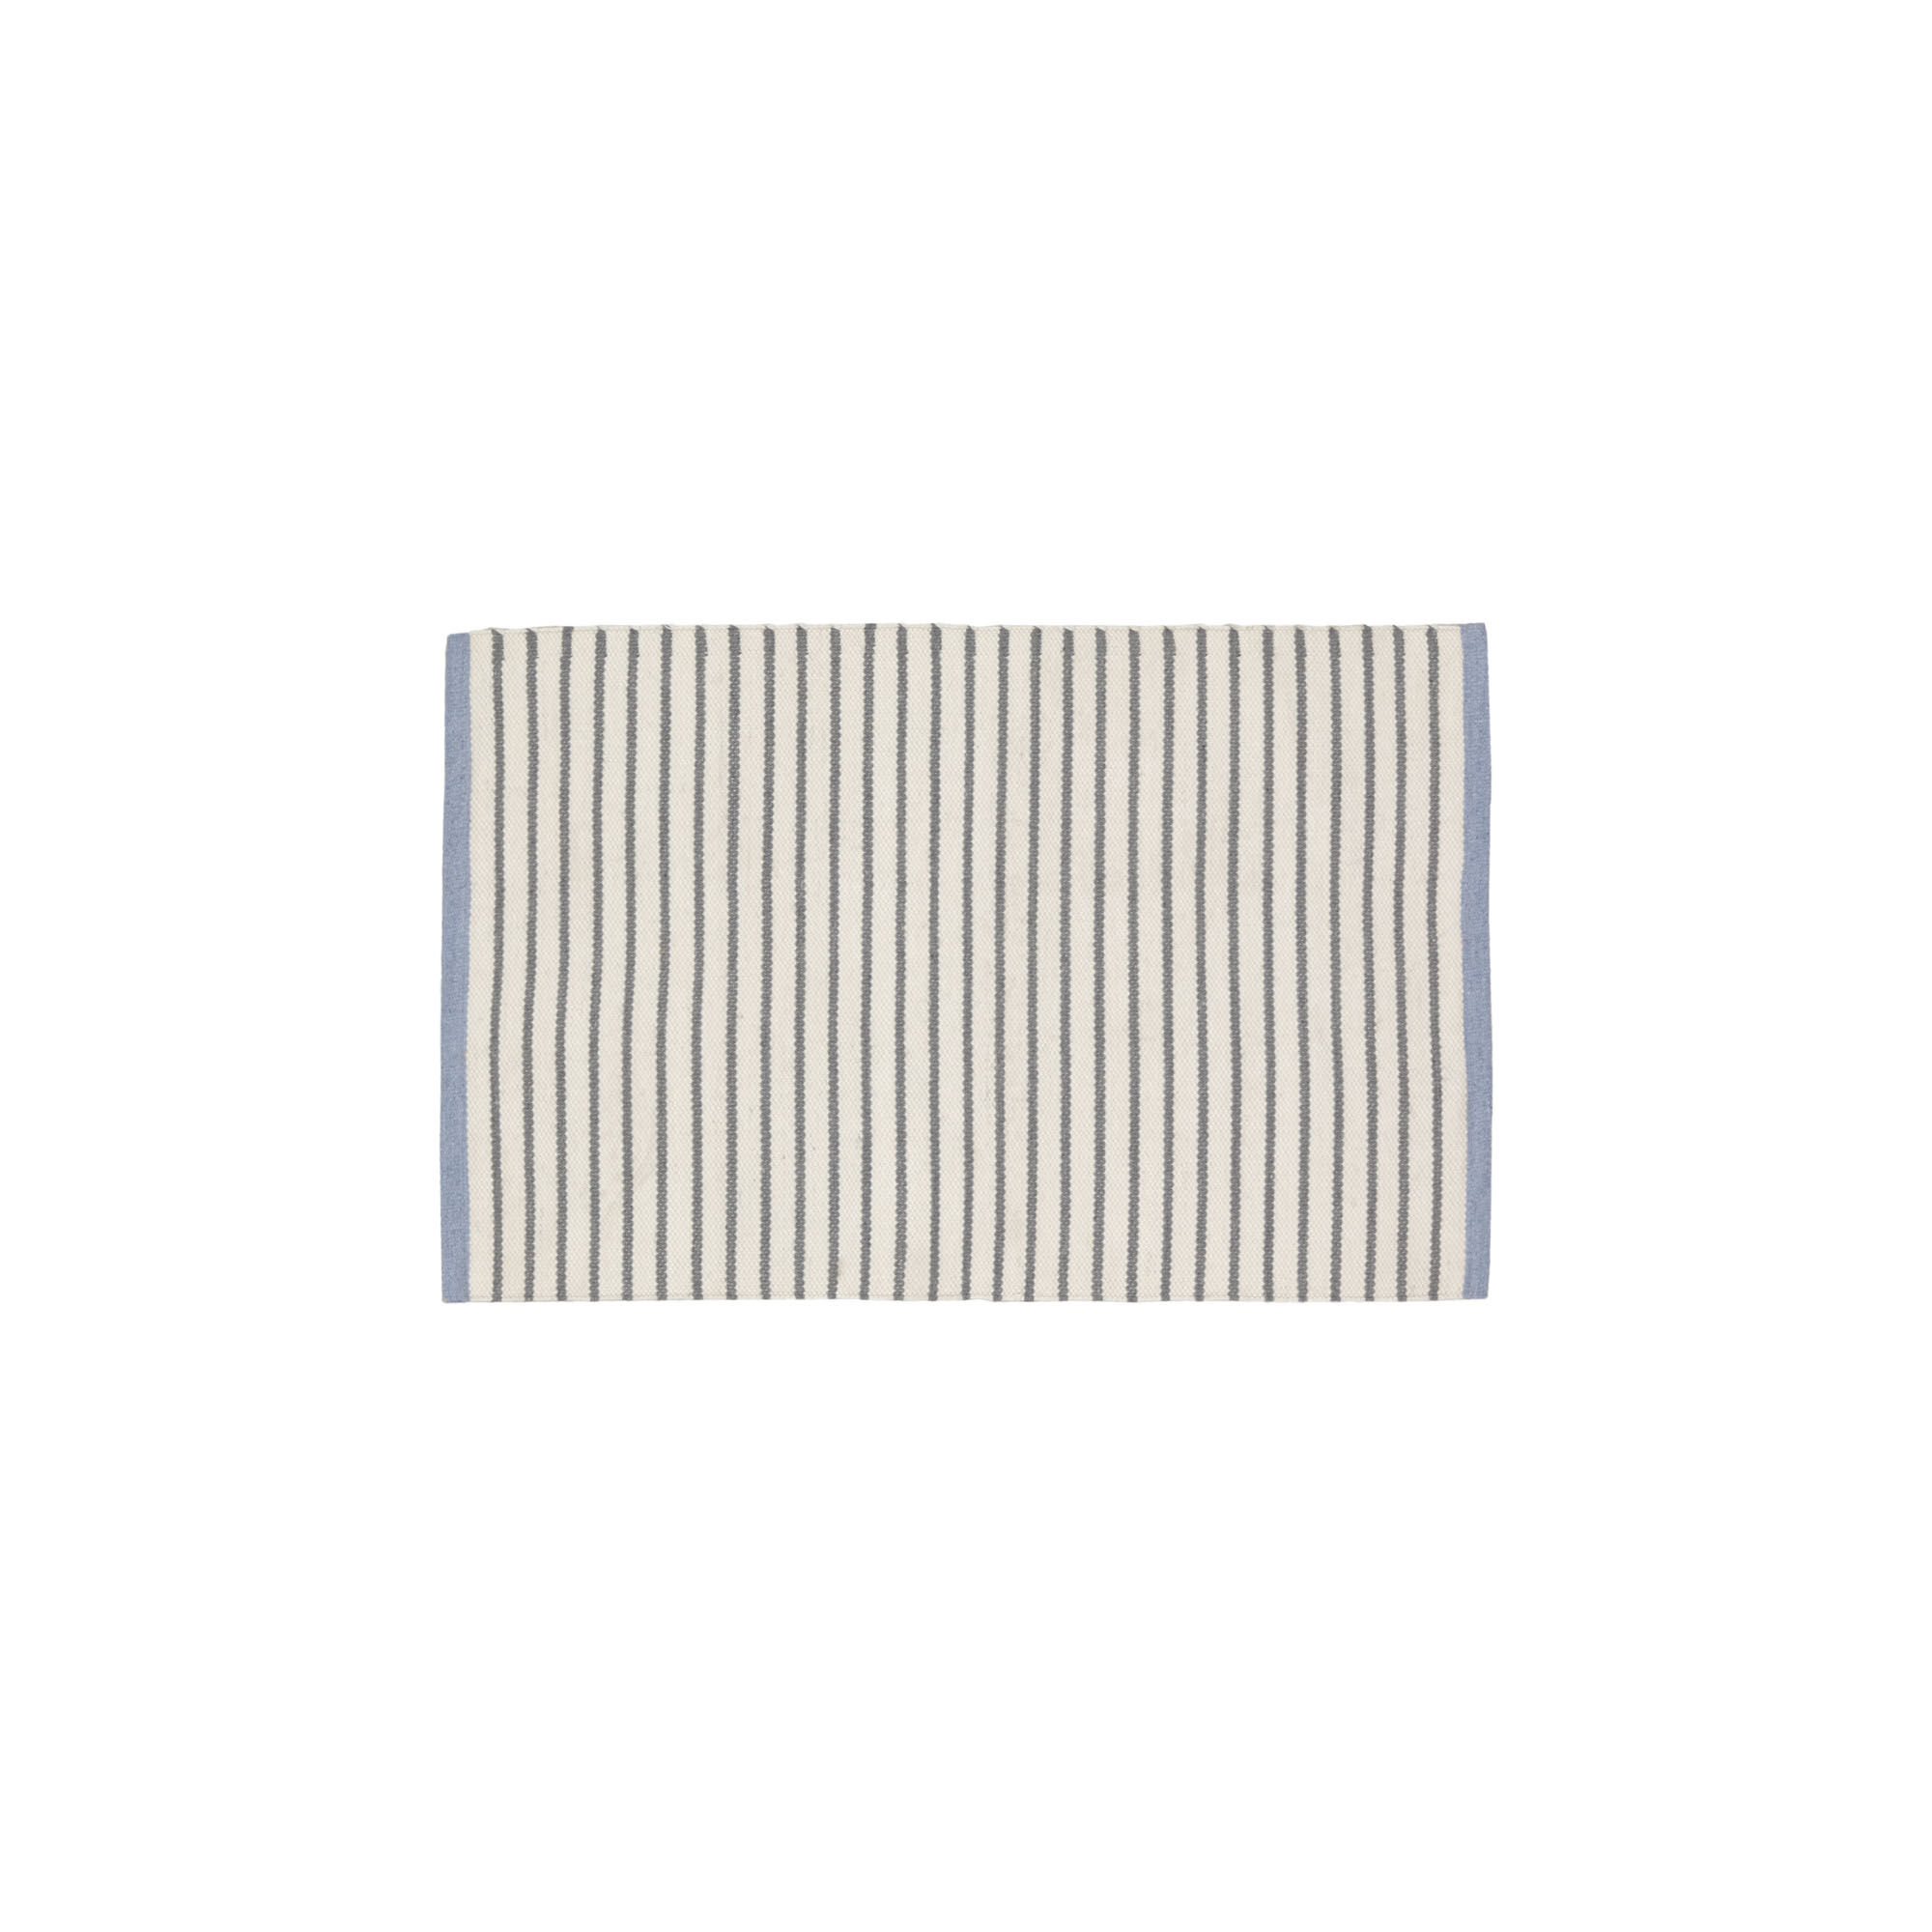 Kave Home Catiana PET grey striped mat 60 x 90 cm